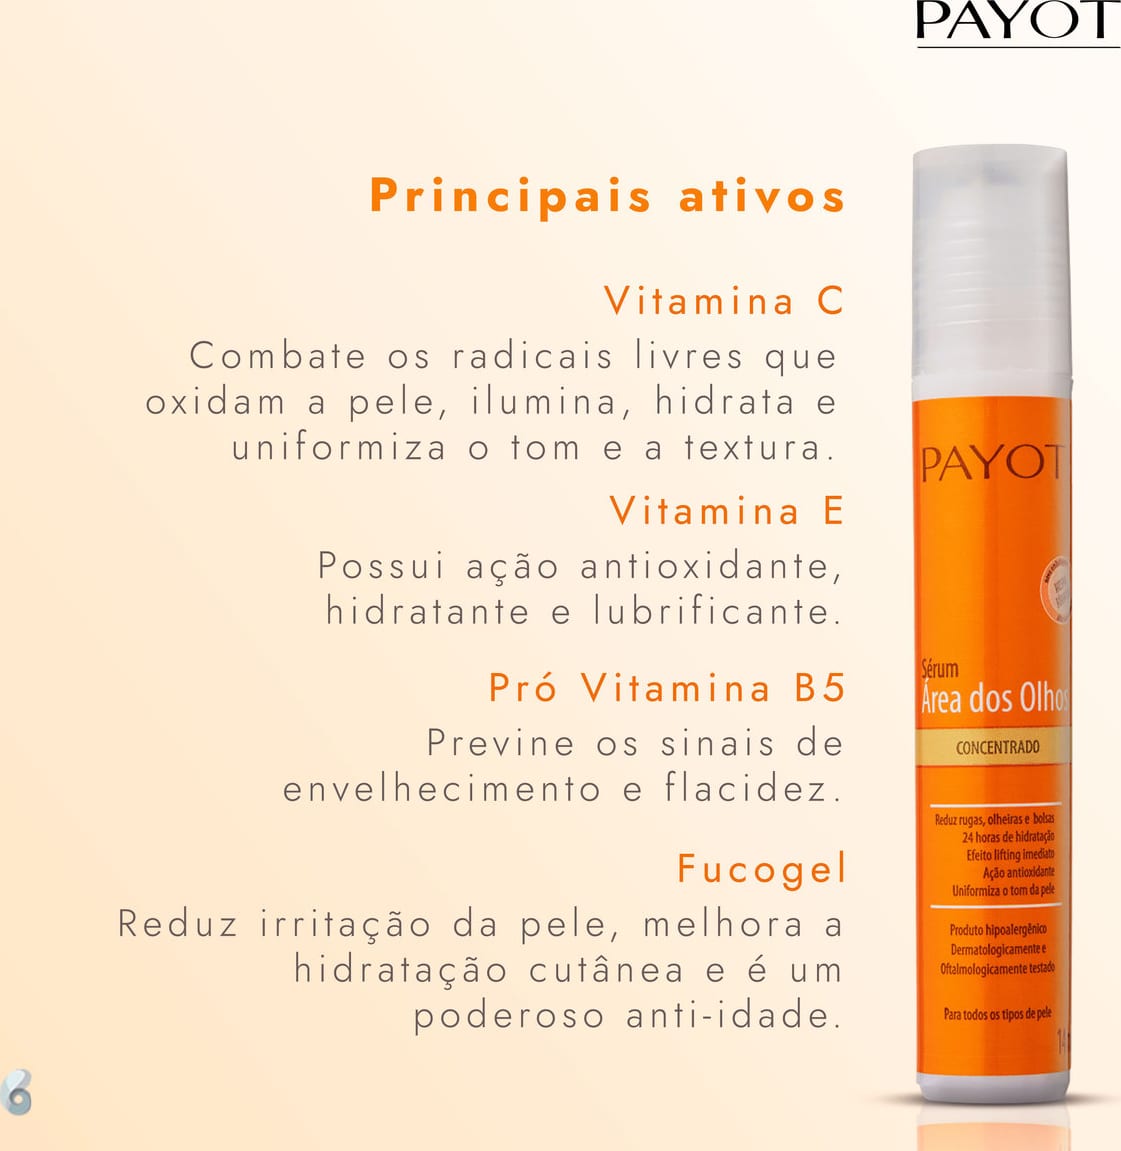 Payot - Sérum Anti-Idade Olhos | Beautybox